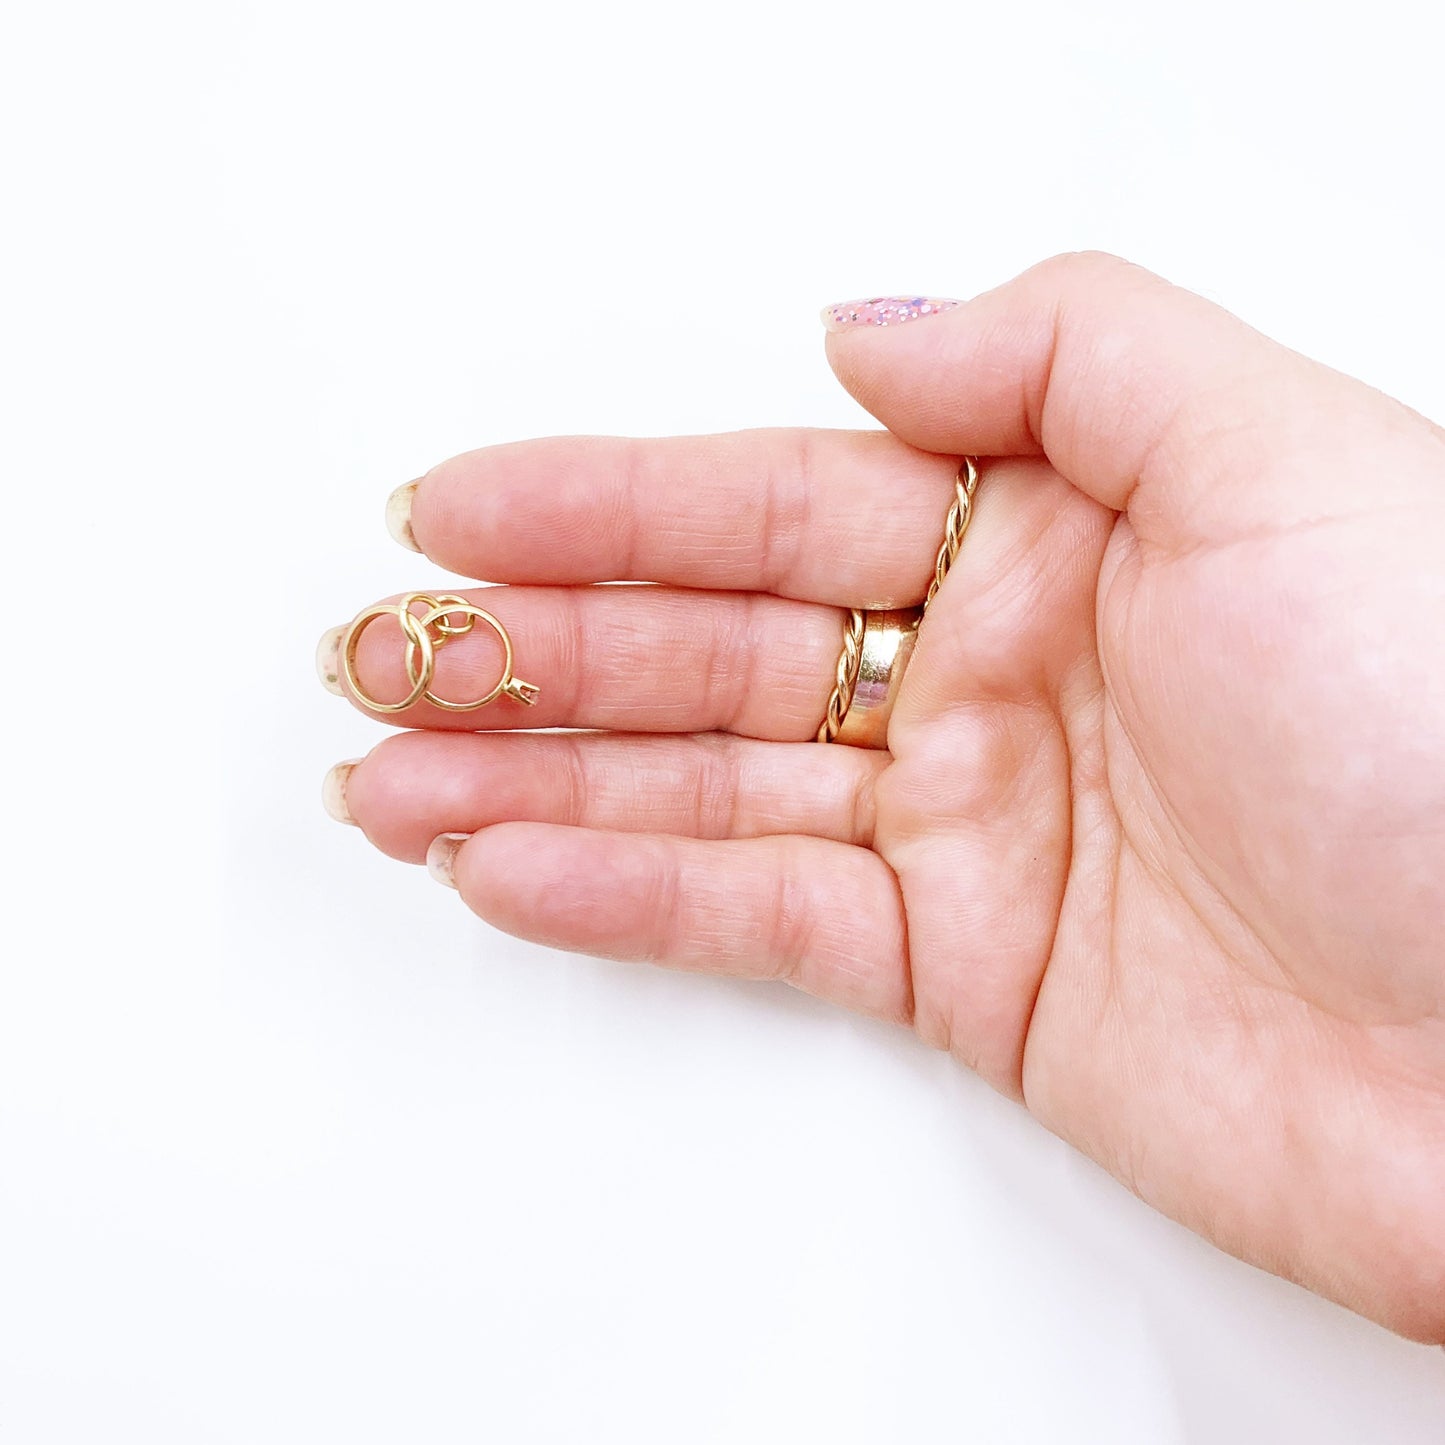 Vintage 14k Gold Tiny Wedding Rings Charm | Miniature Rings Charm | 14K Solitaire Ring and Wedding Band Mini Charm